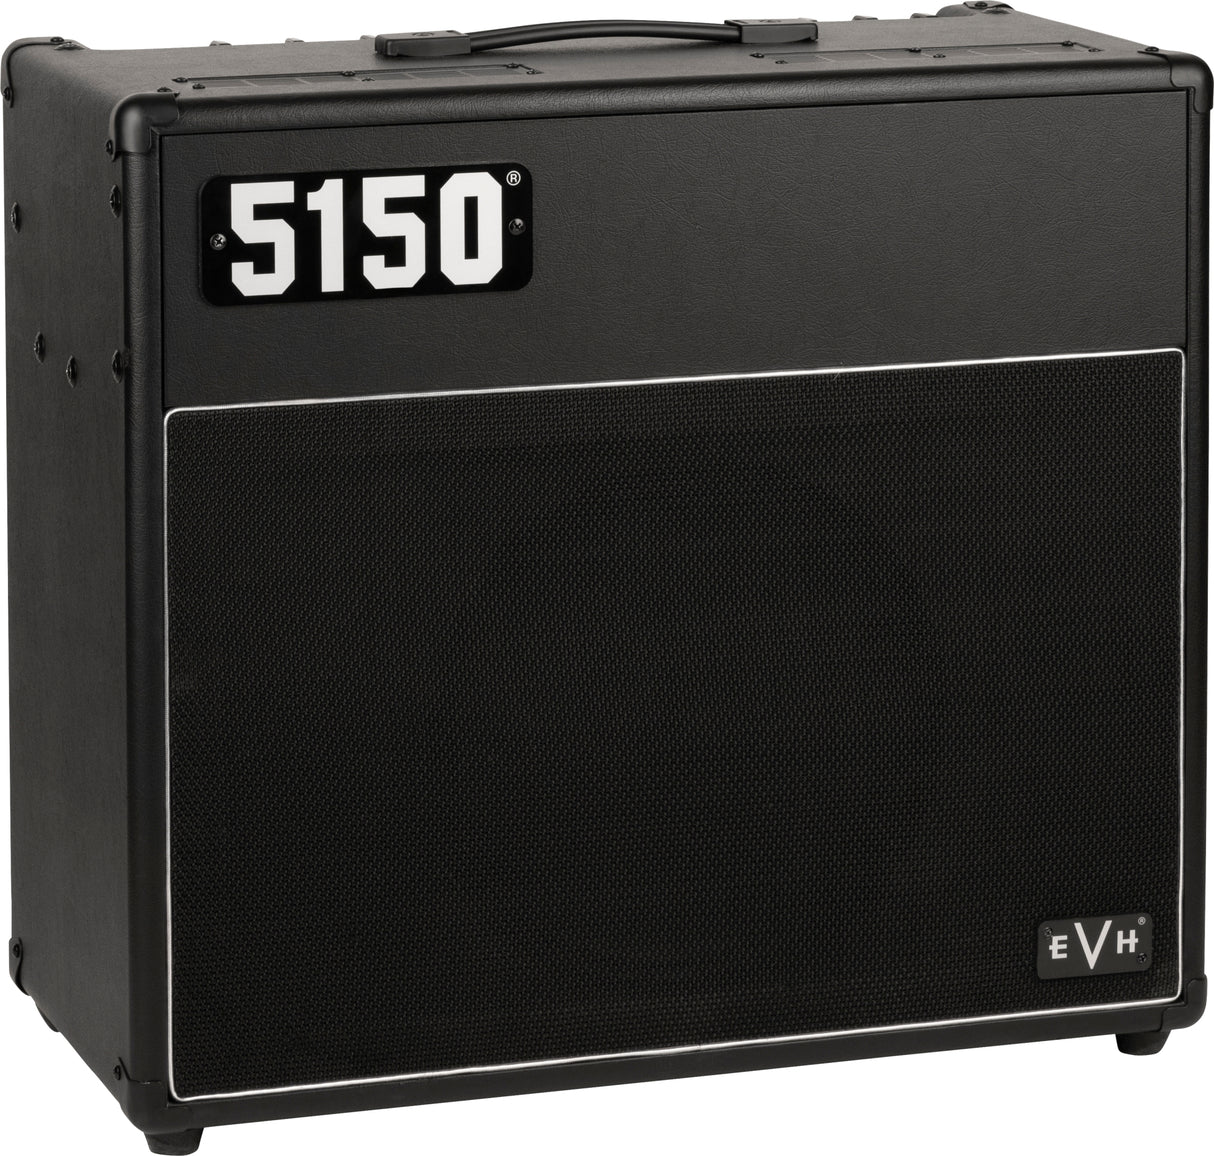 EVH 5150 Iconic Series 40w 1x12 Combo Amp, Black